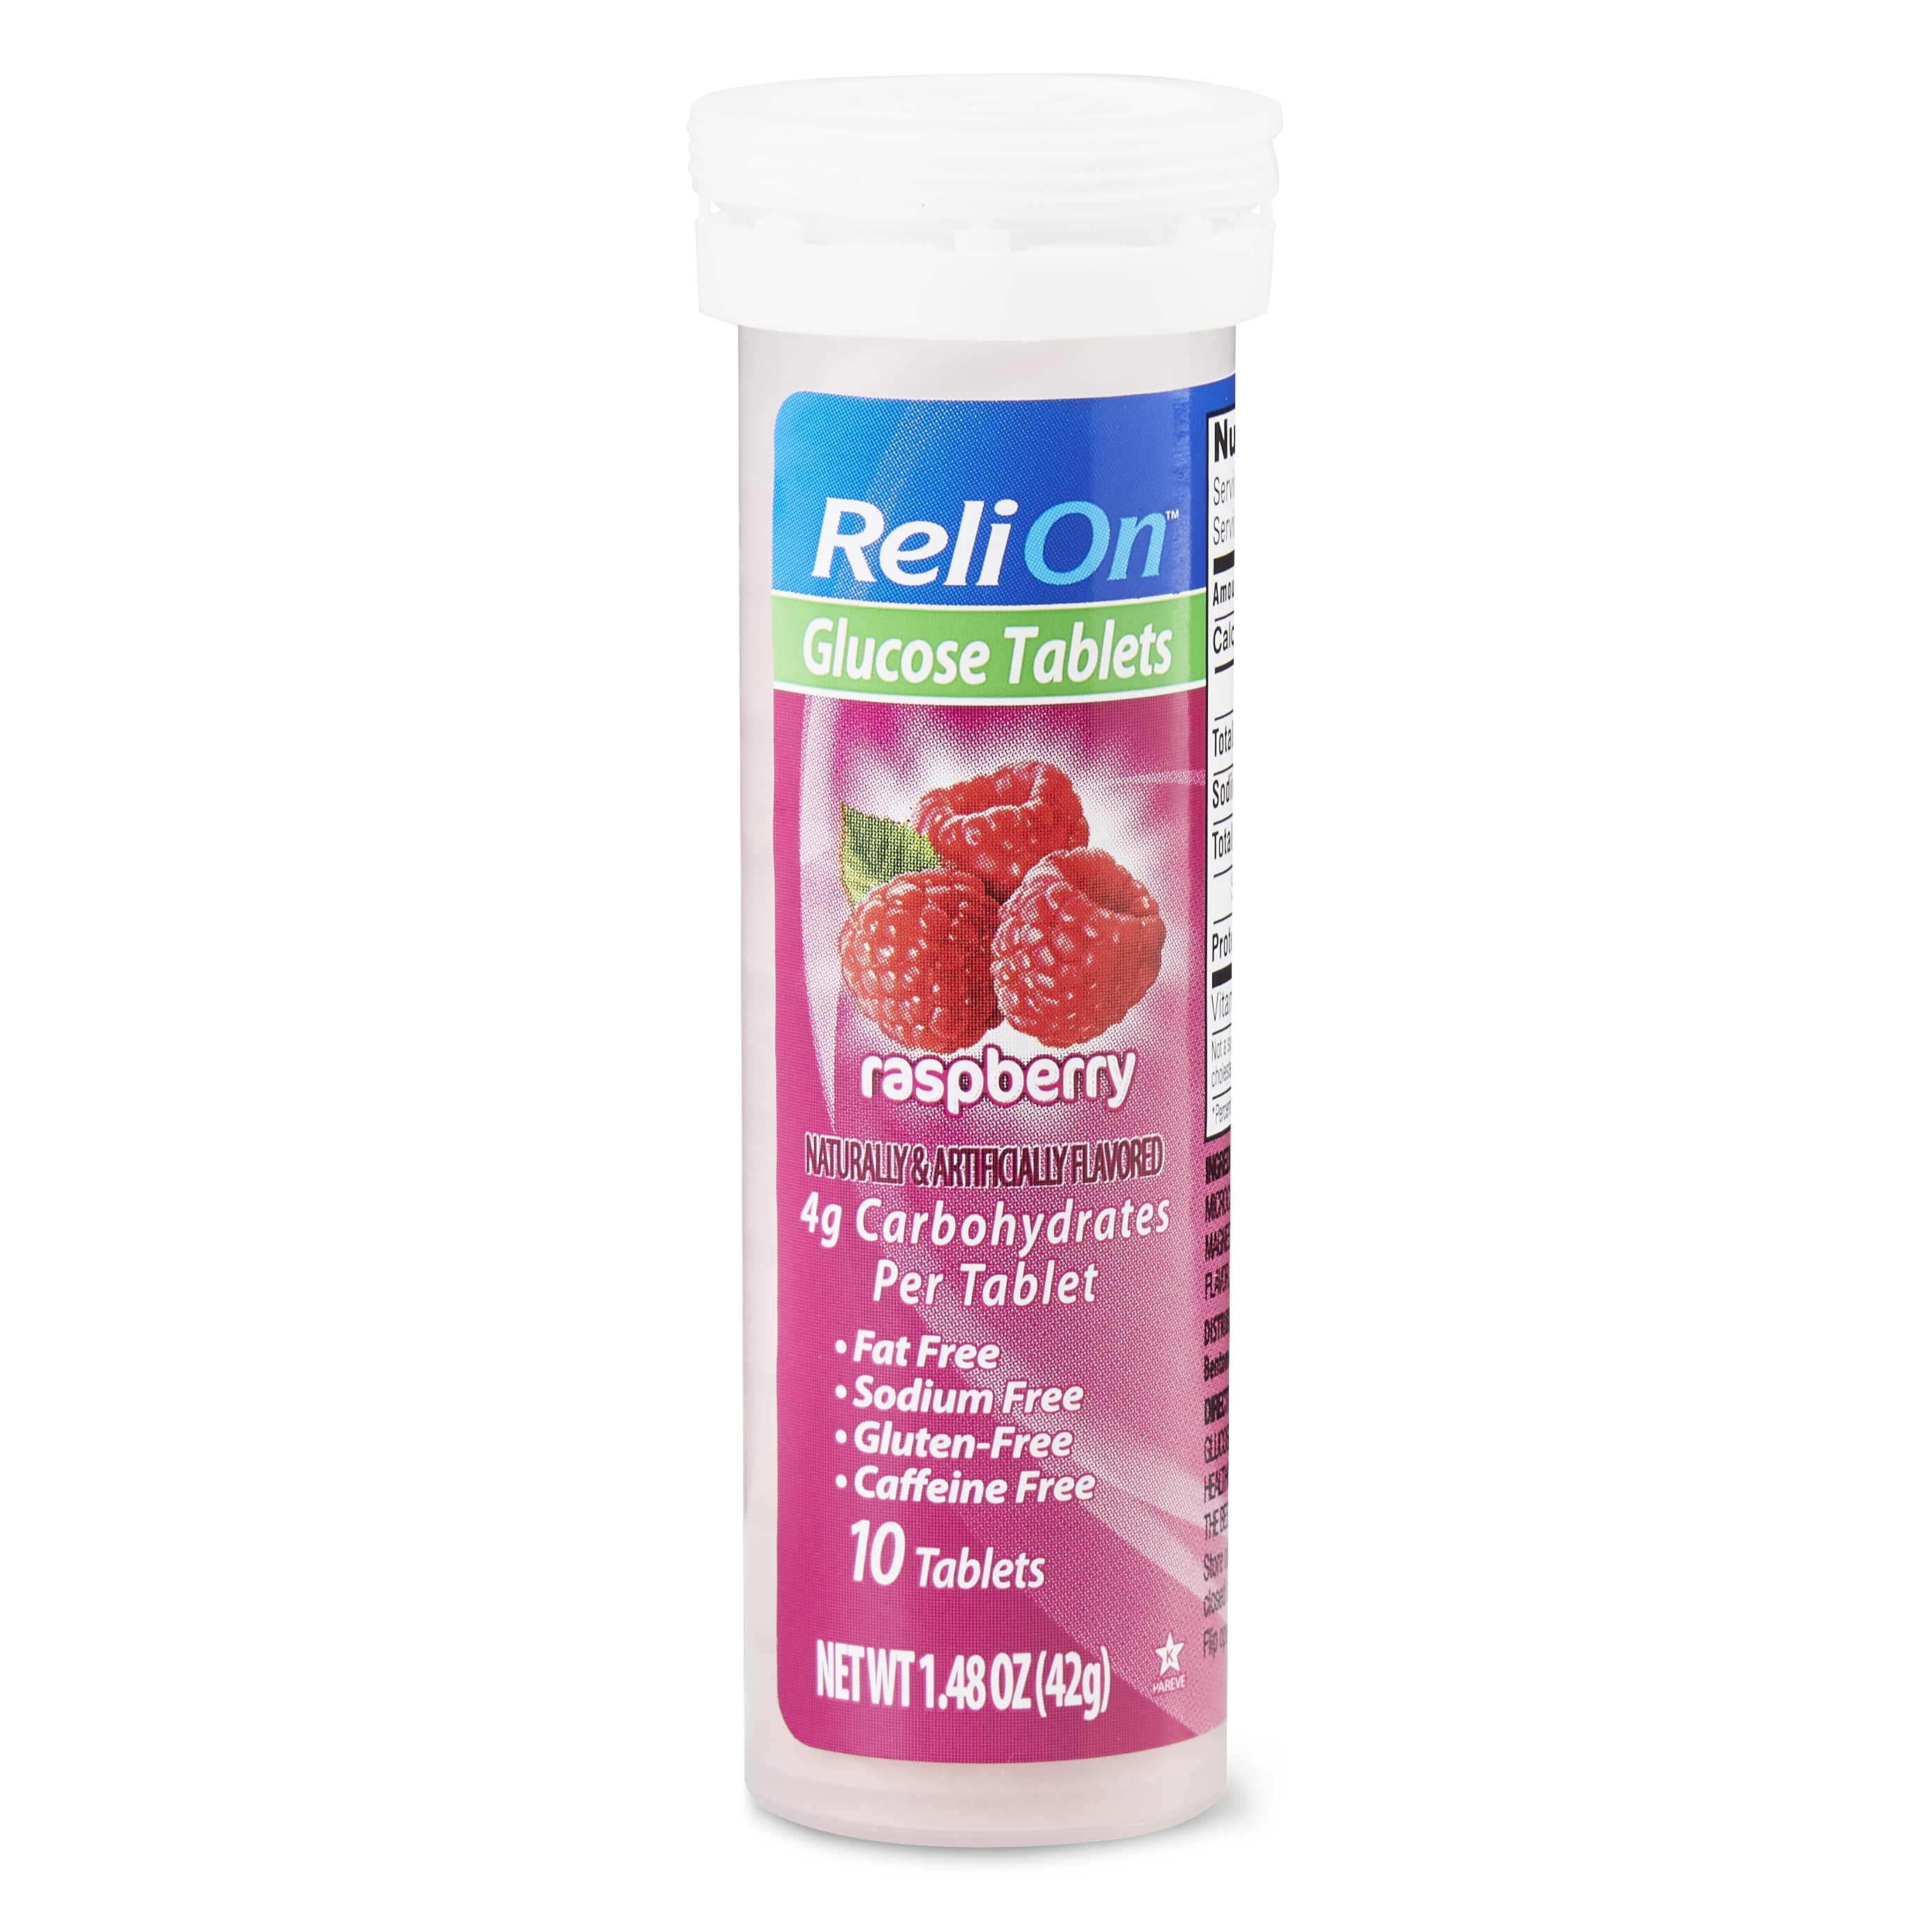 ReliOn Raspberry Glucose Tablets, 10 Count - Walmart.com.